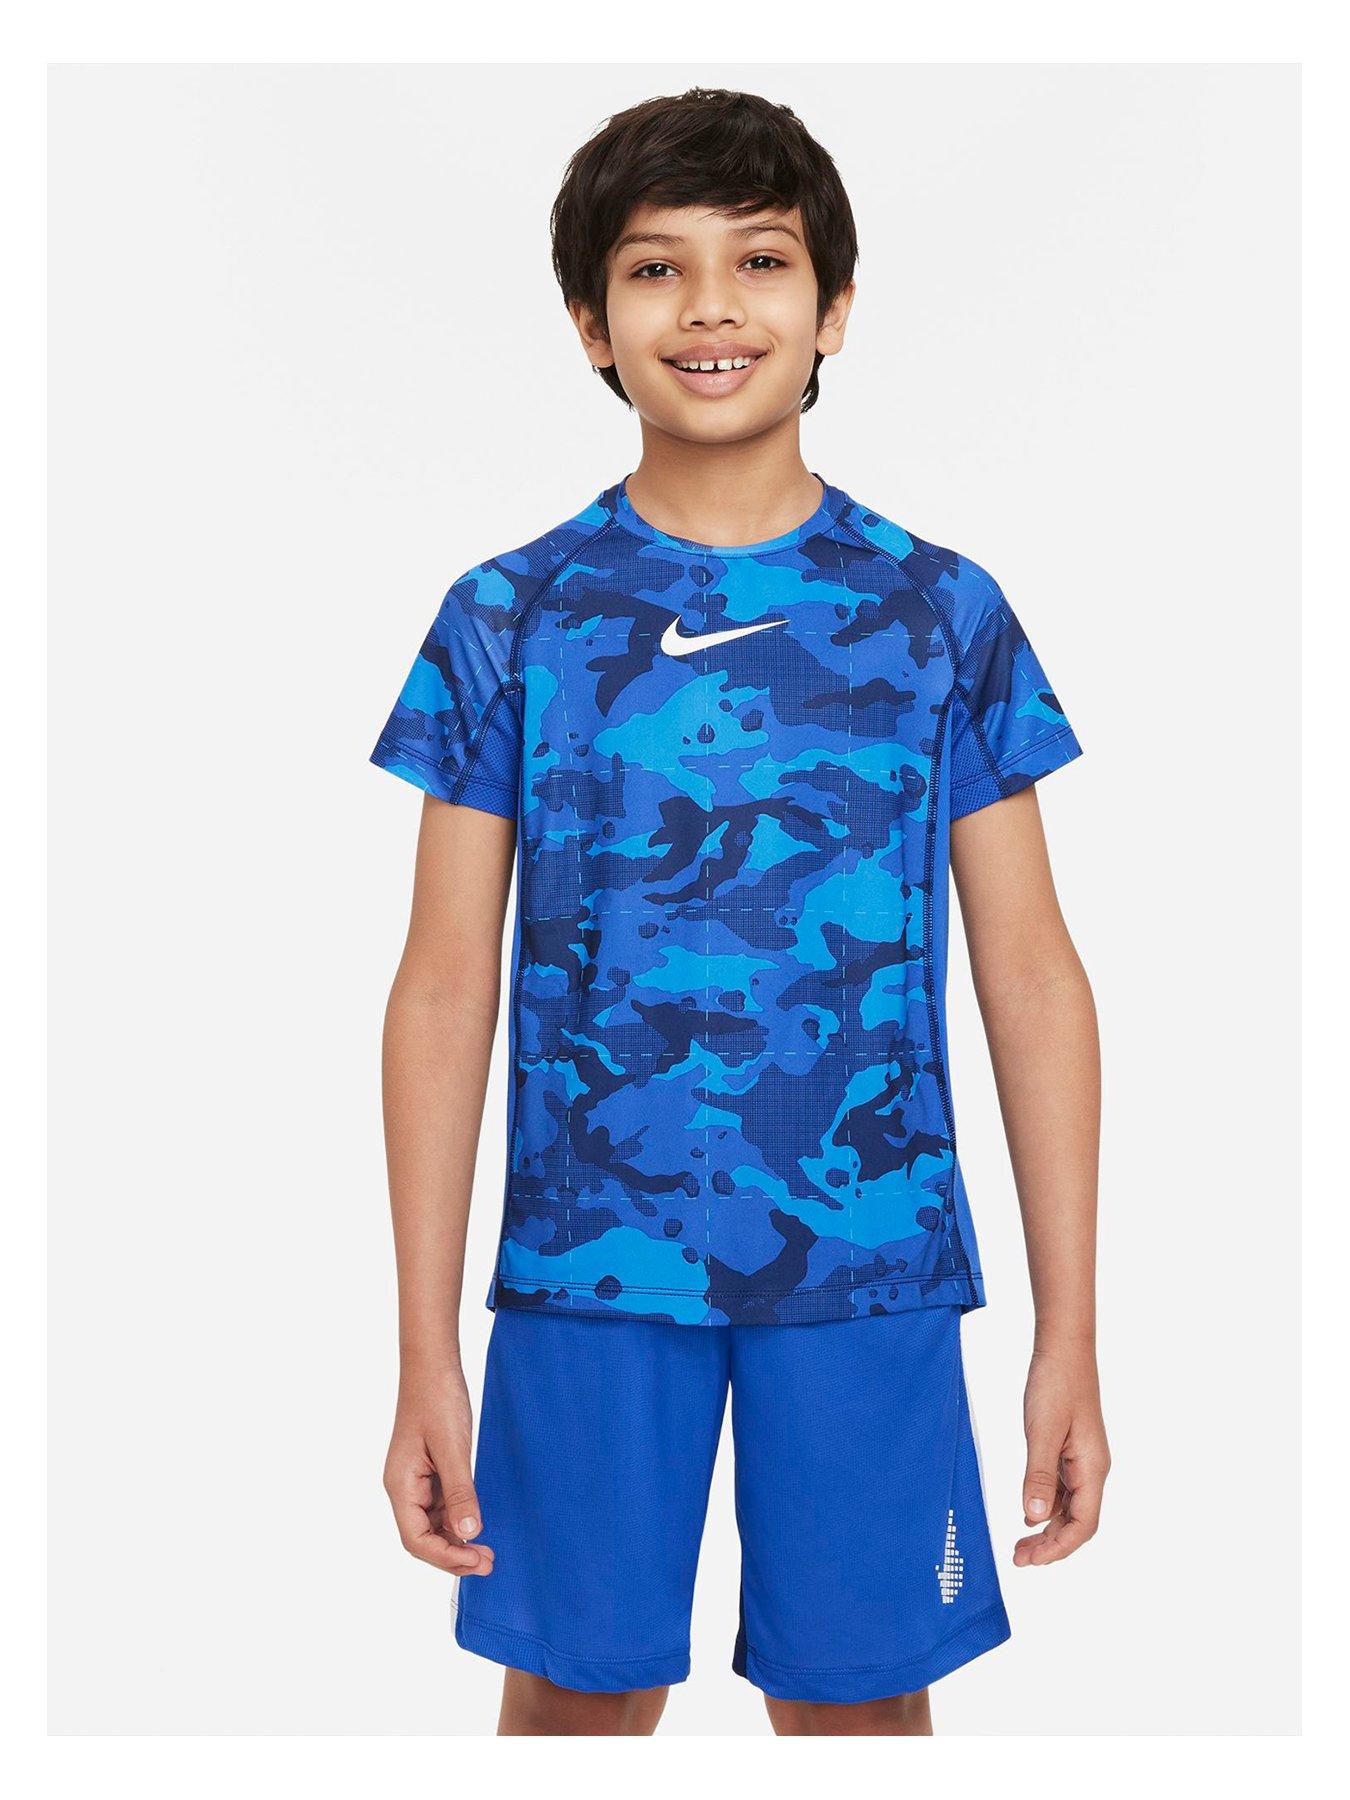 Kids Older Boys Dri-FIT All Over Print Short Sleeve Top - Blue